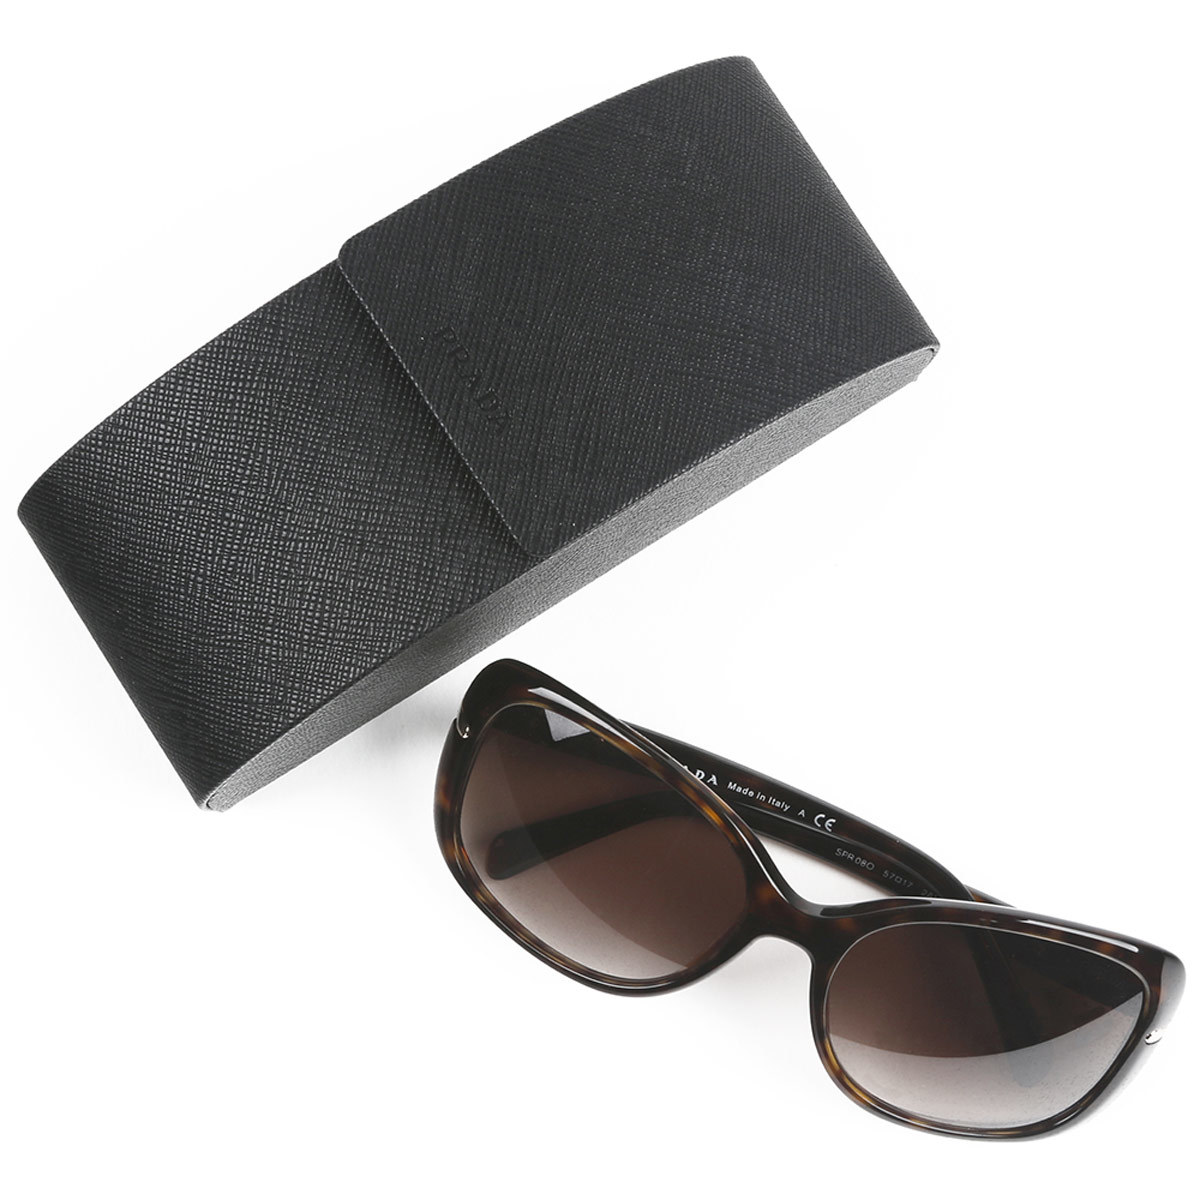 Prada Tortoise Shell Sunglasses with Brown Lenses, SPR 080 2AU-6S1